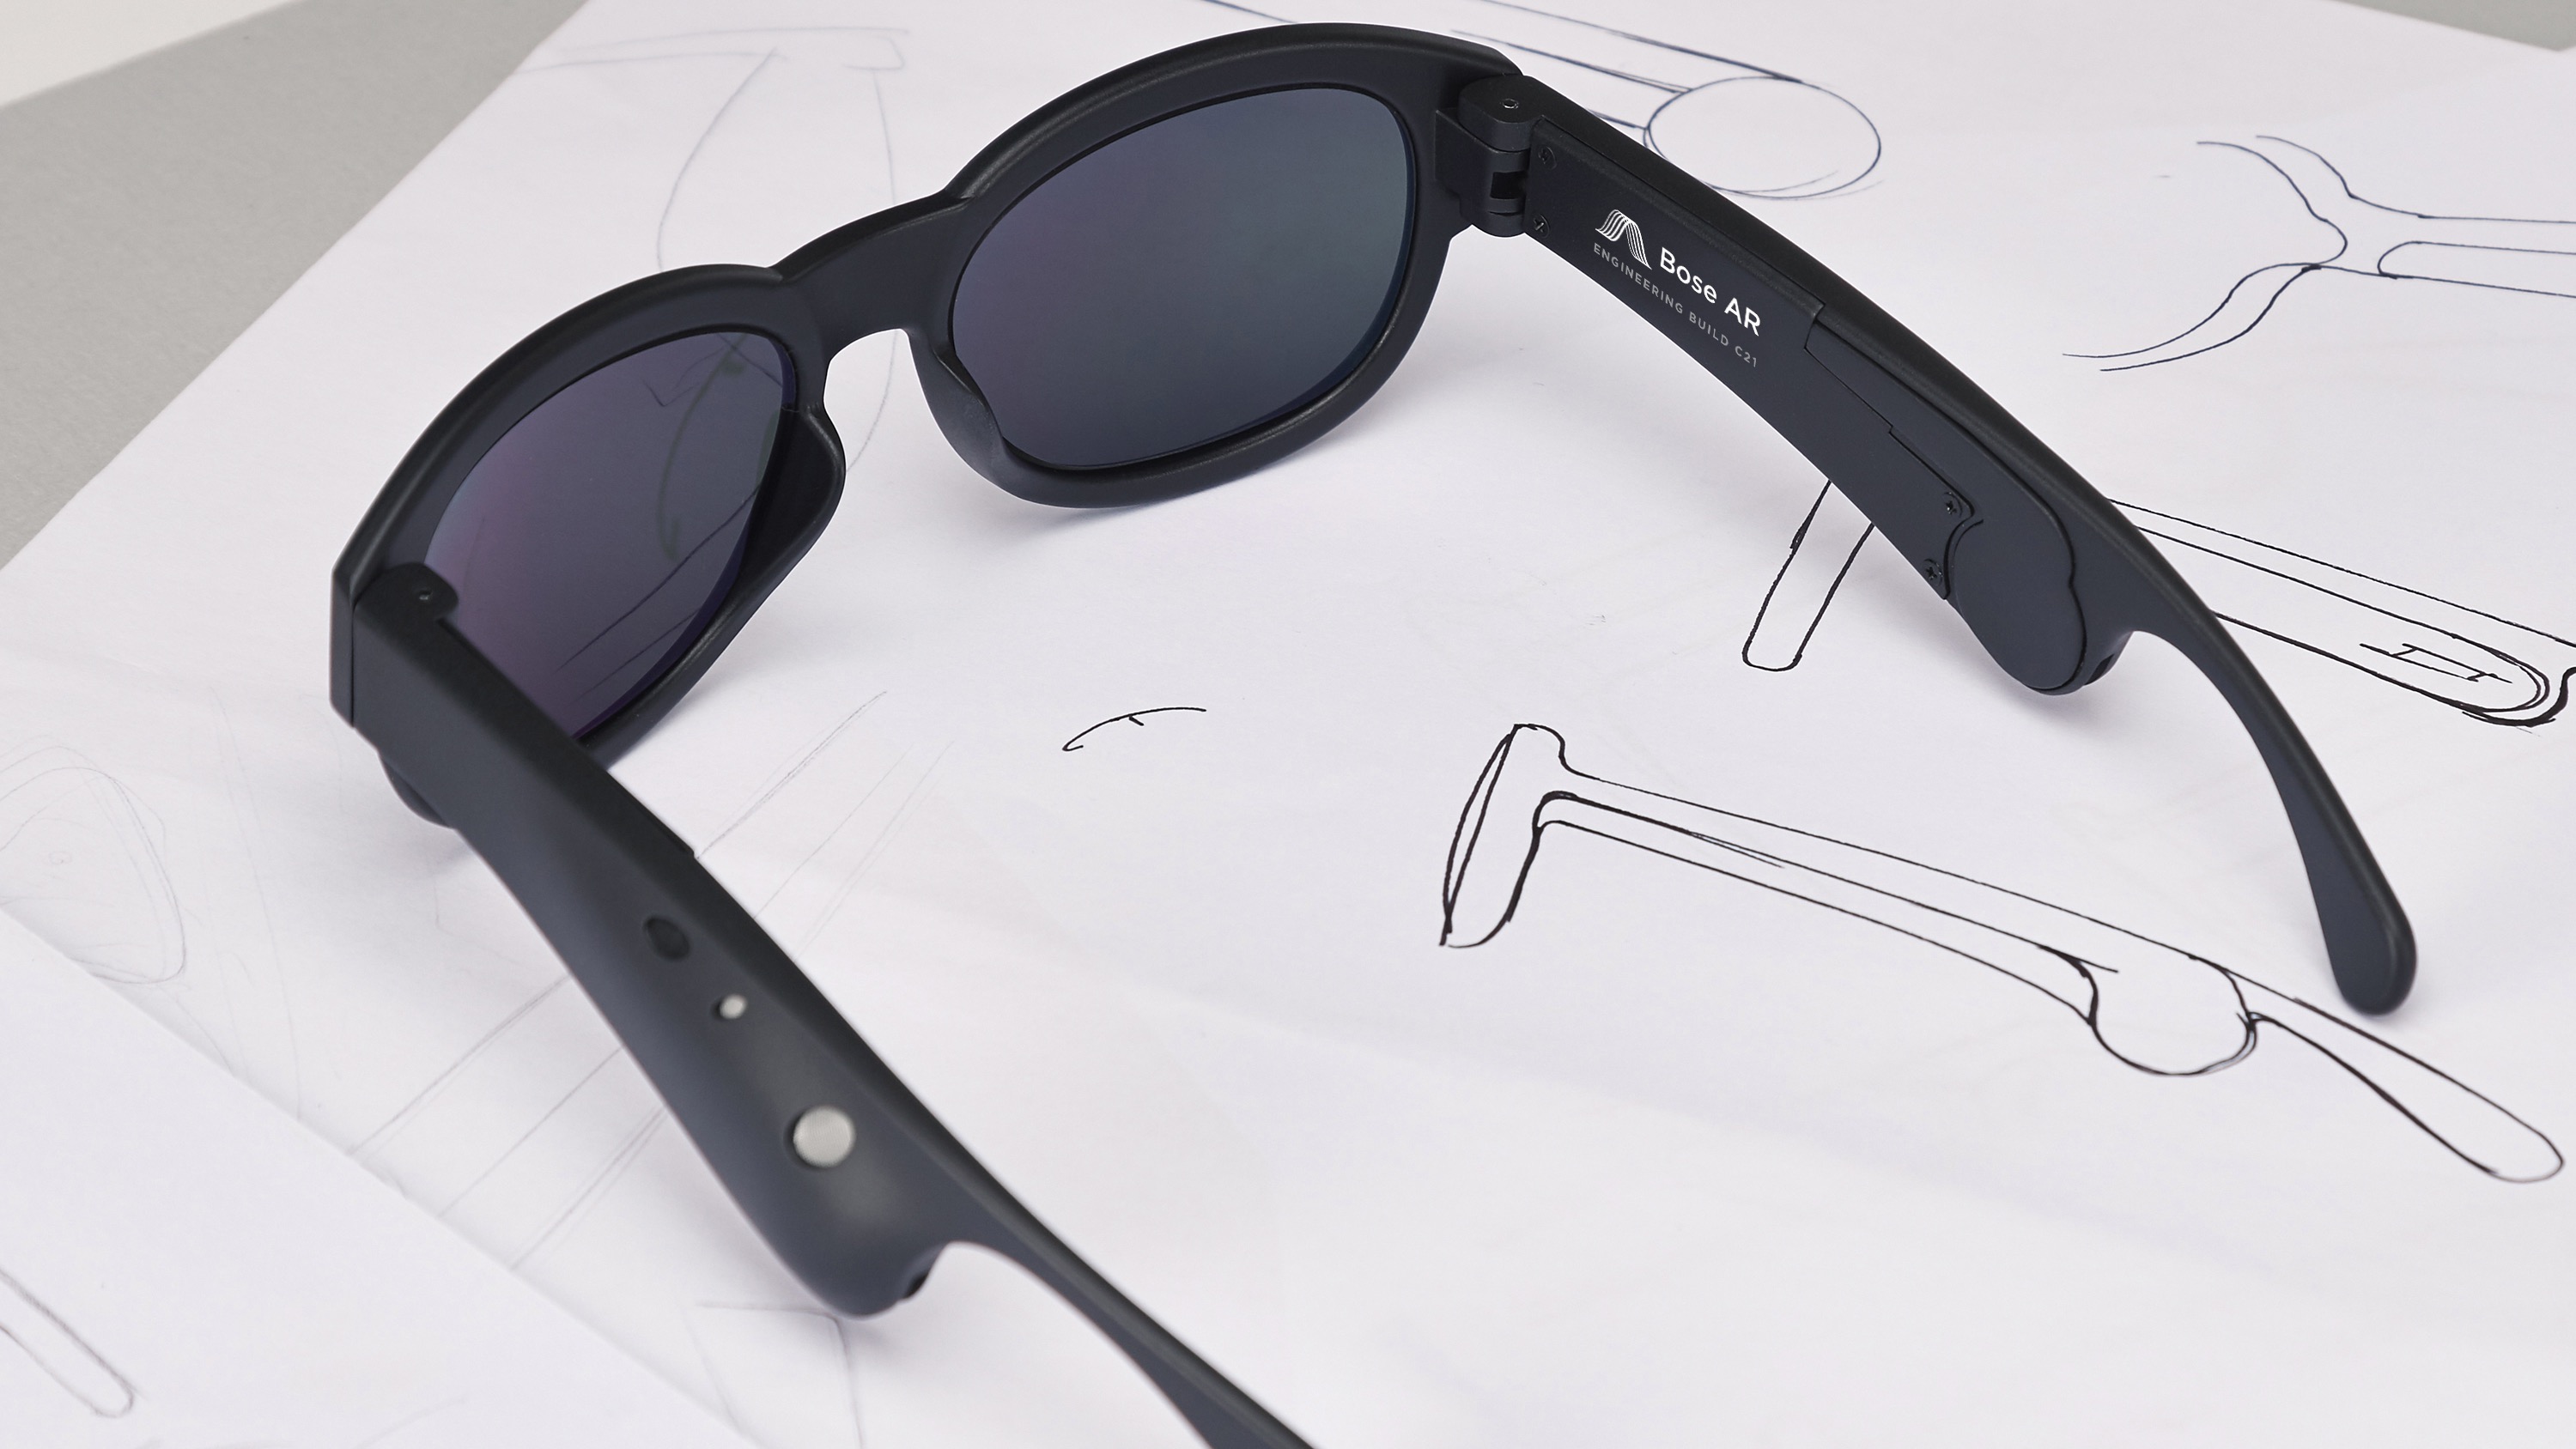 Bose AR glasses enhance the world with sound, not visuals | TechRadar